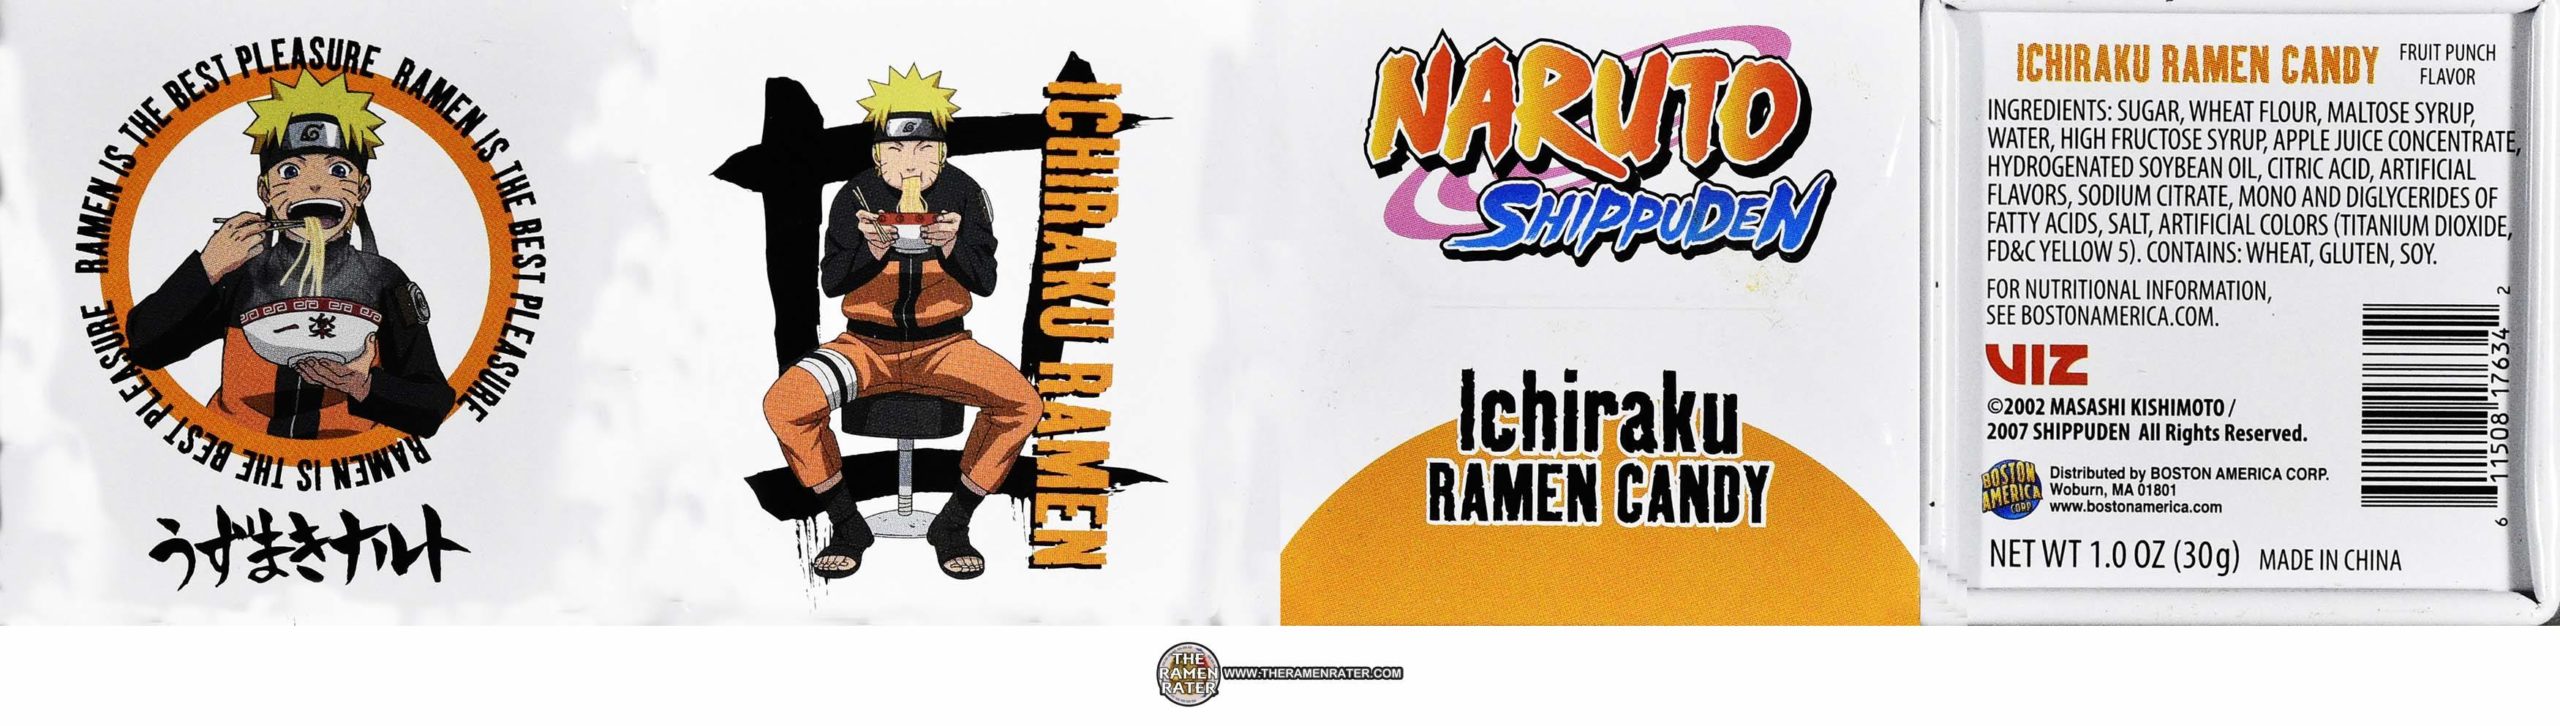 Naruto Lamen Shippuden (Completo) A versão preferida do Naruto: 1